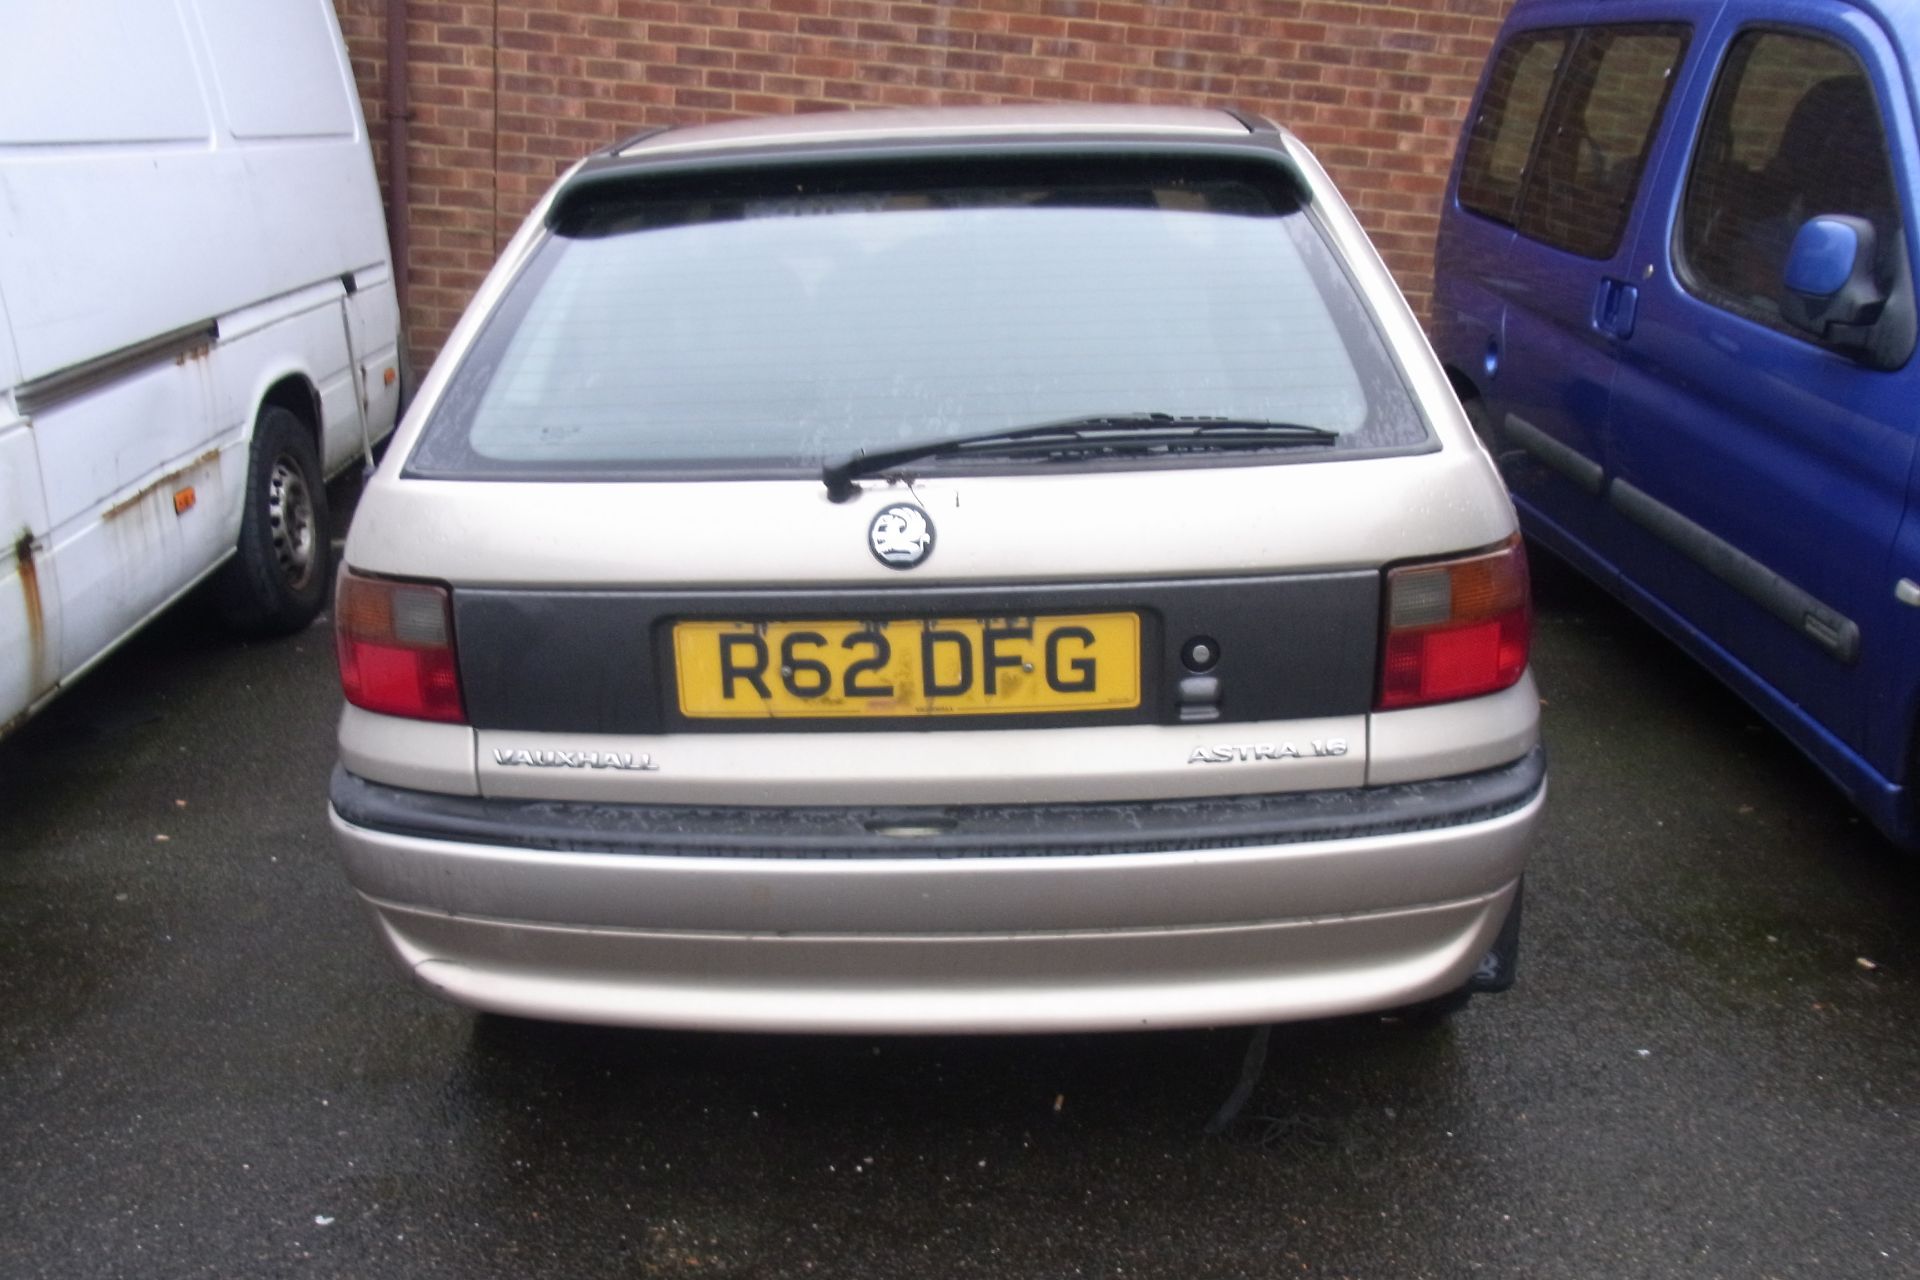 R62 DFG - Vauxhall Astra Arctic 16V - No V5 - No Keys - BY ORDER OF BRIGHTON & HOVE COUNCIL - Image 3 of 3